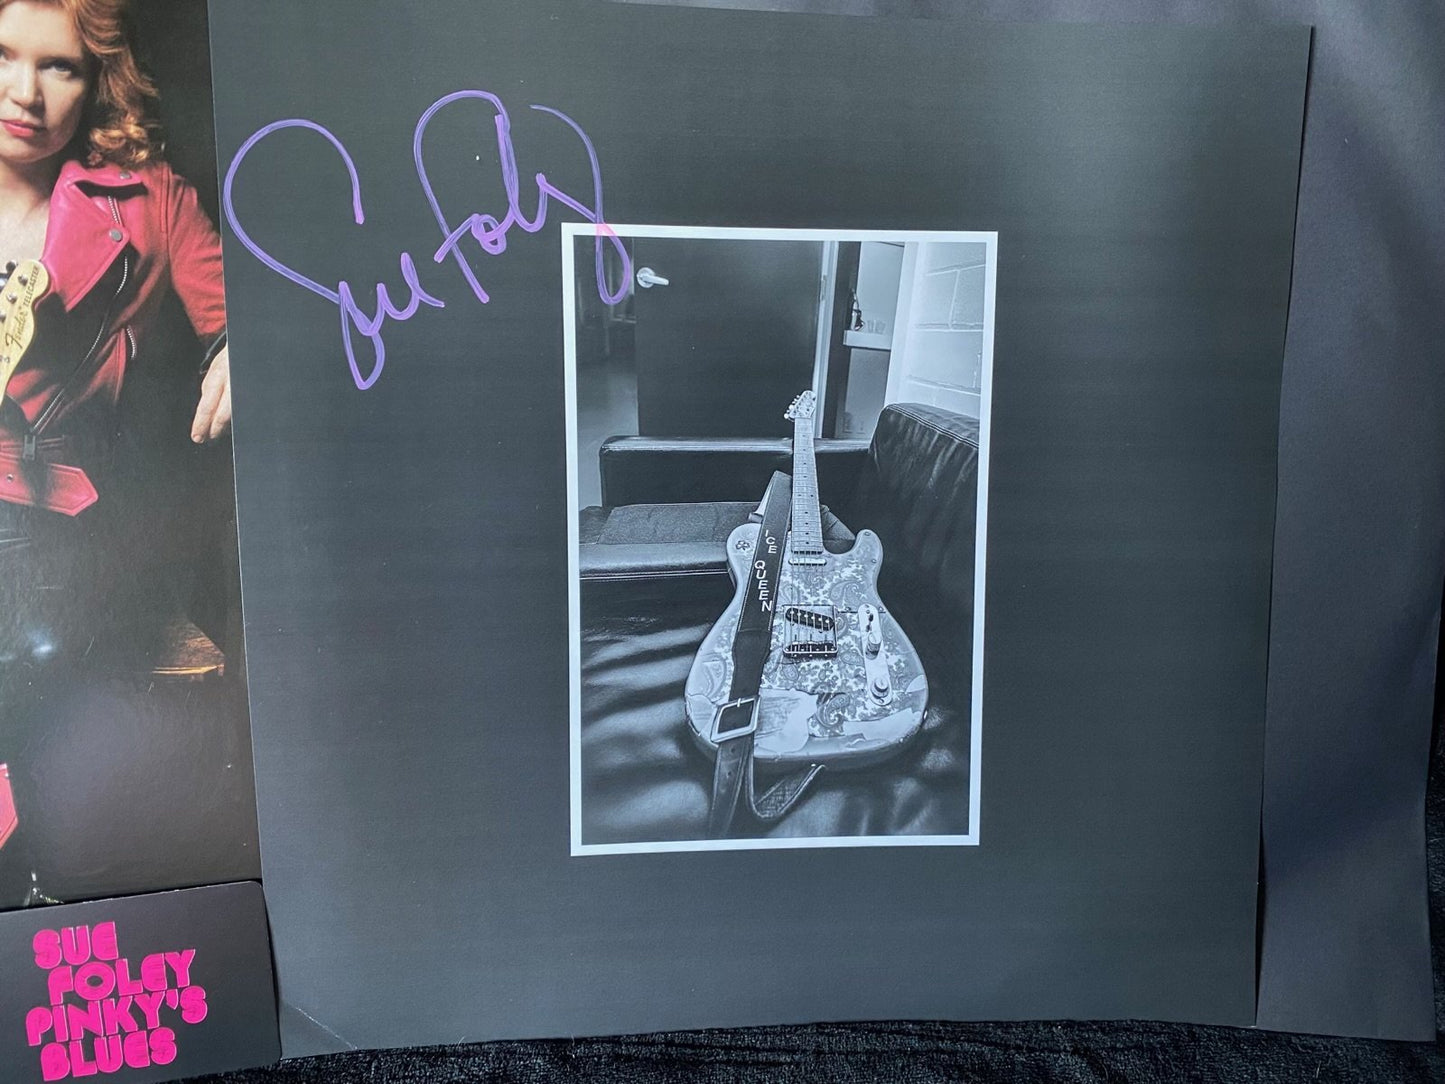 Sue Foley -  Pinky's Blues w/ Autographed Insert Vinyl LP